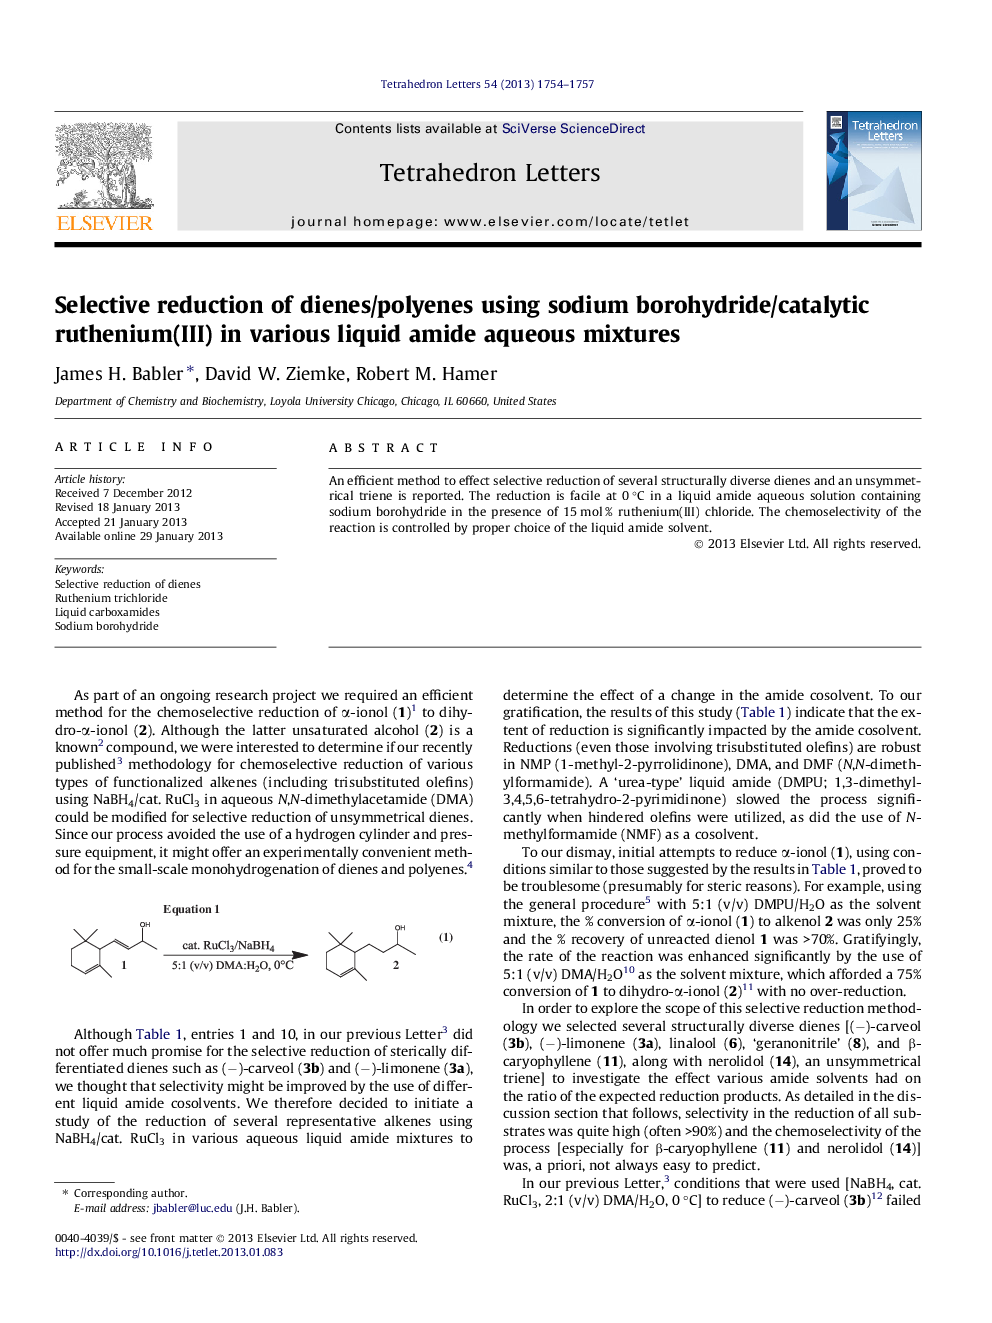 Selective reduction of dienes/polyenes using sodium borohydride/catalytic ruthenium(III) in various liquid amide aqueous mixtures